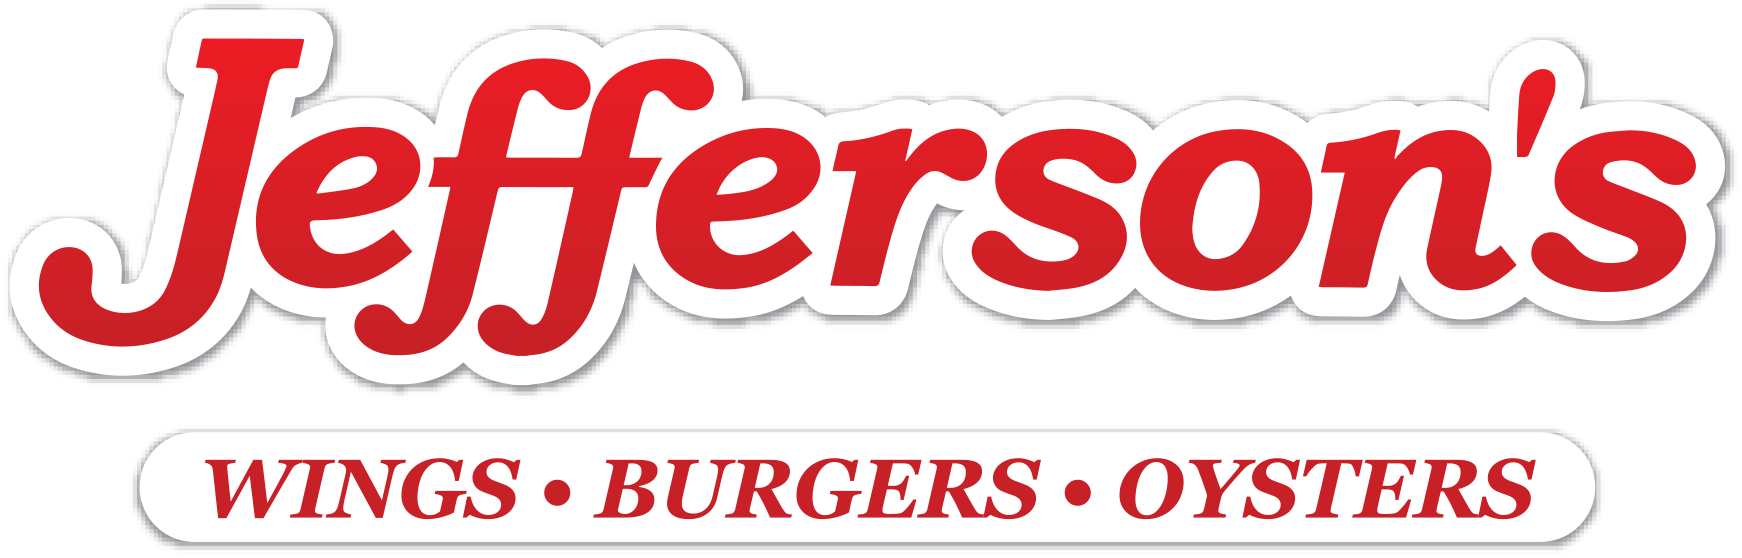 jeffersons logo